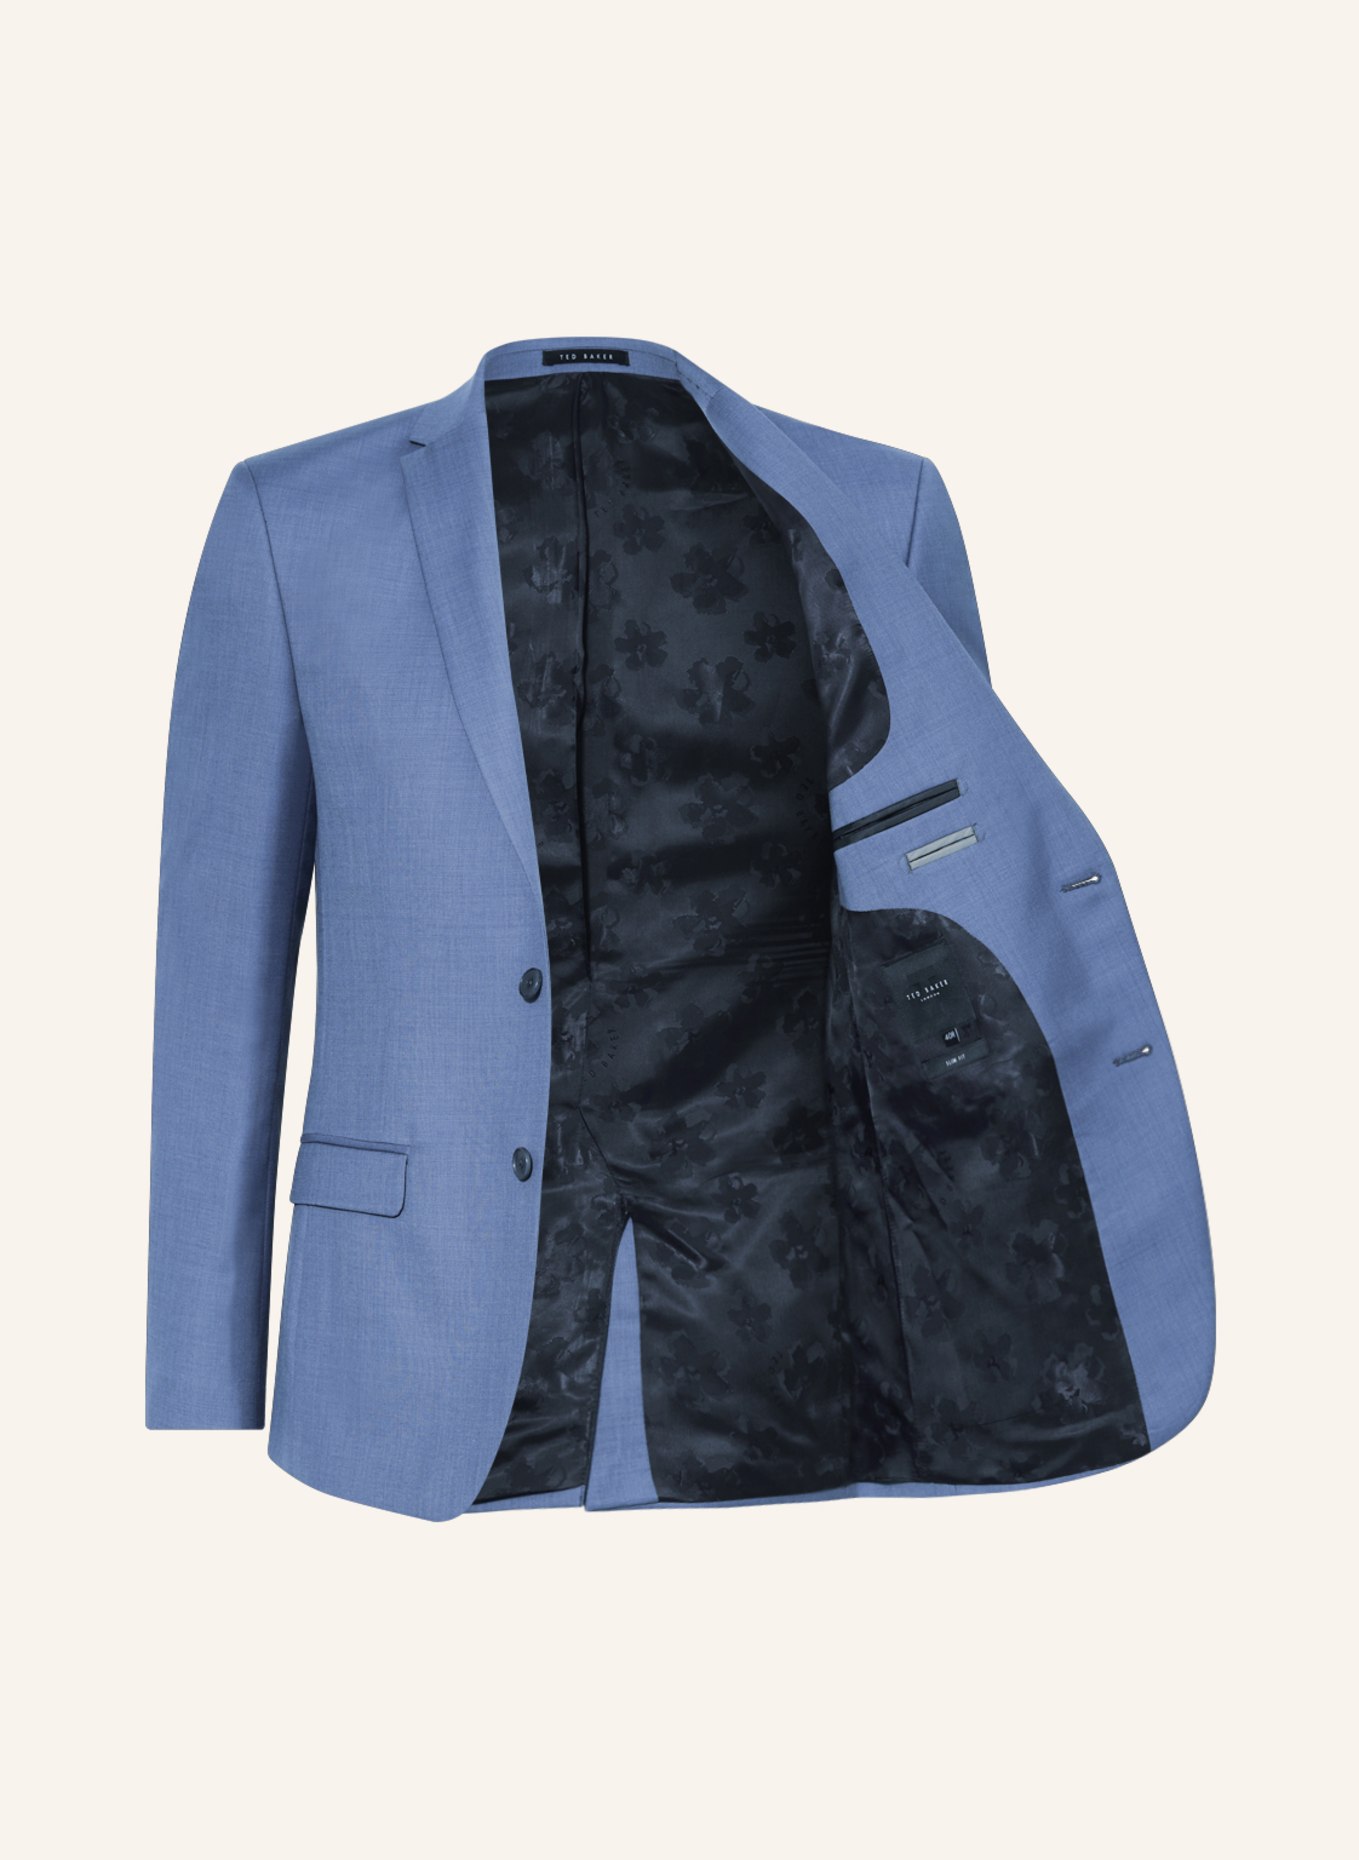 TED BAKER Anzugsakko DORSEJS Slim Fit, Farbe: BLUE BLUE (Bild 4)